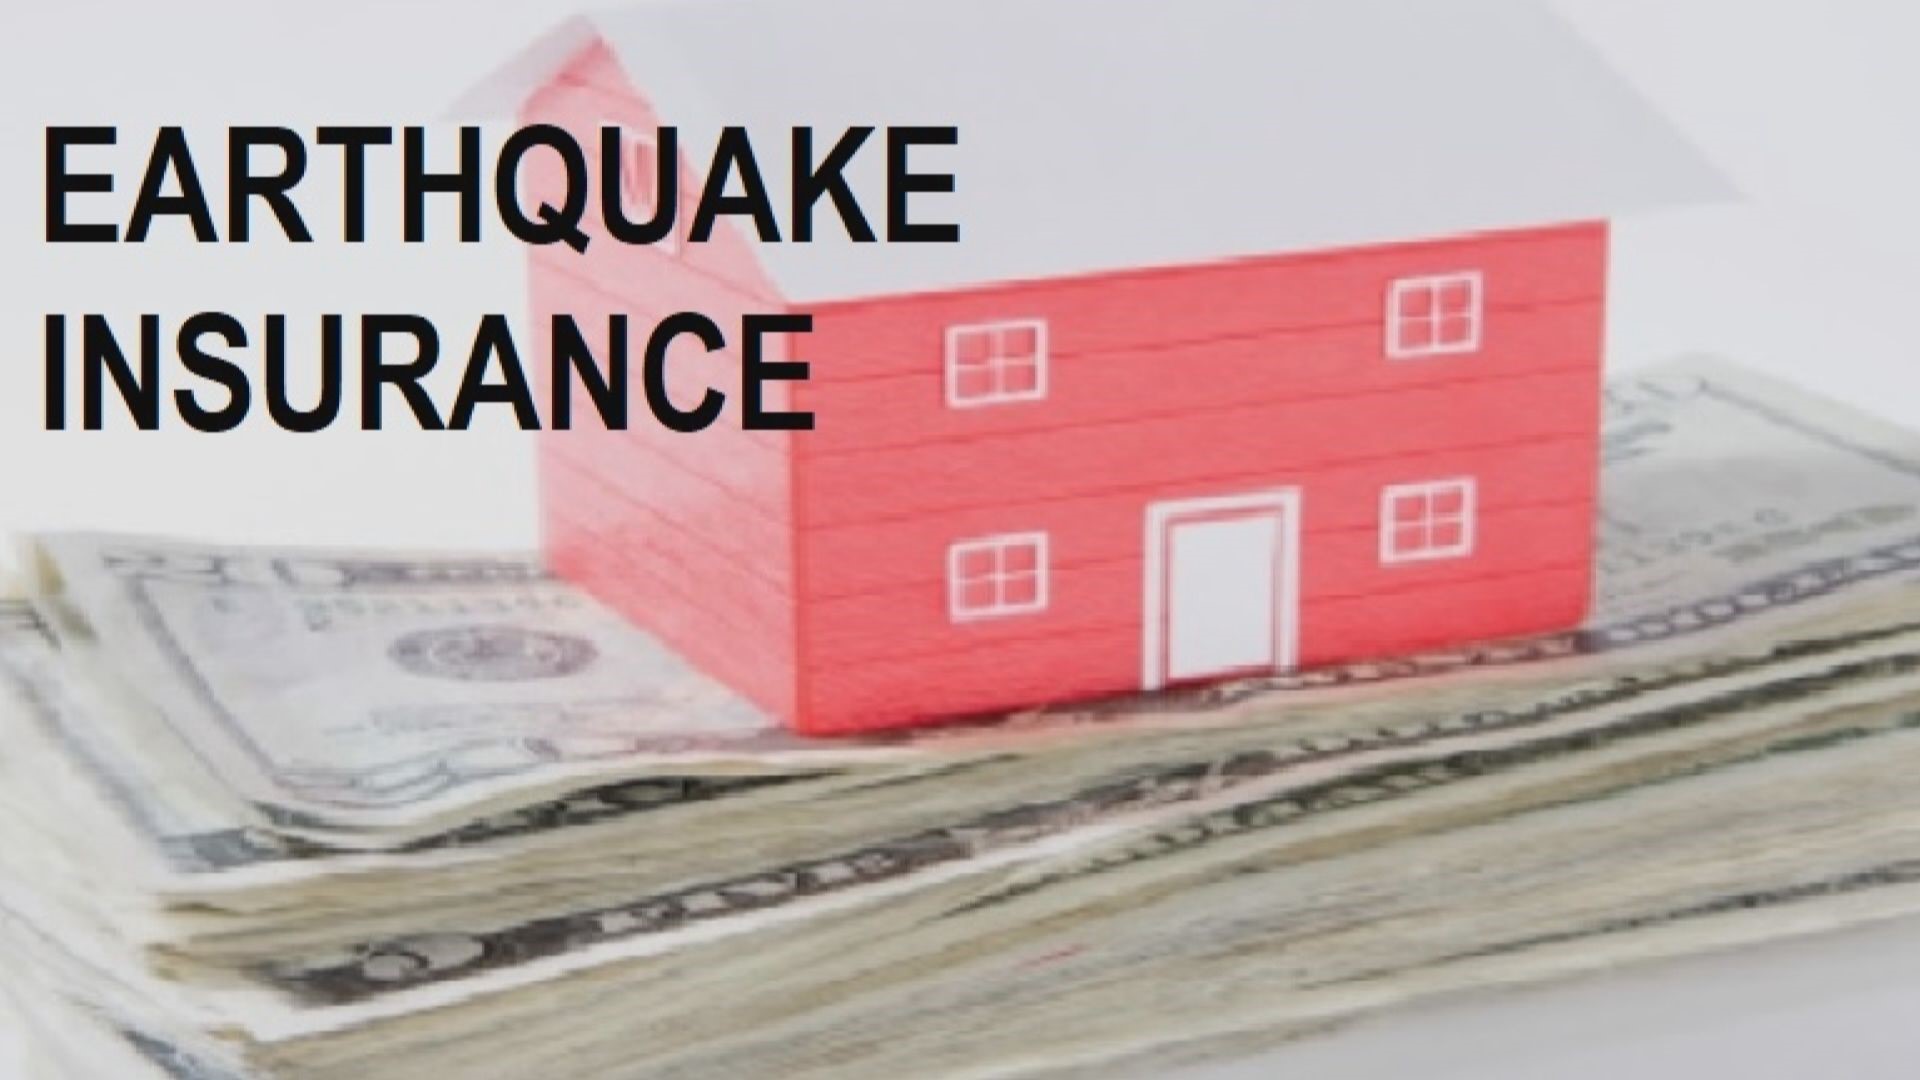 Earthquake insurance is an added policy, like wind or flood.